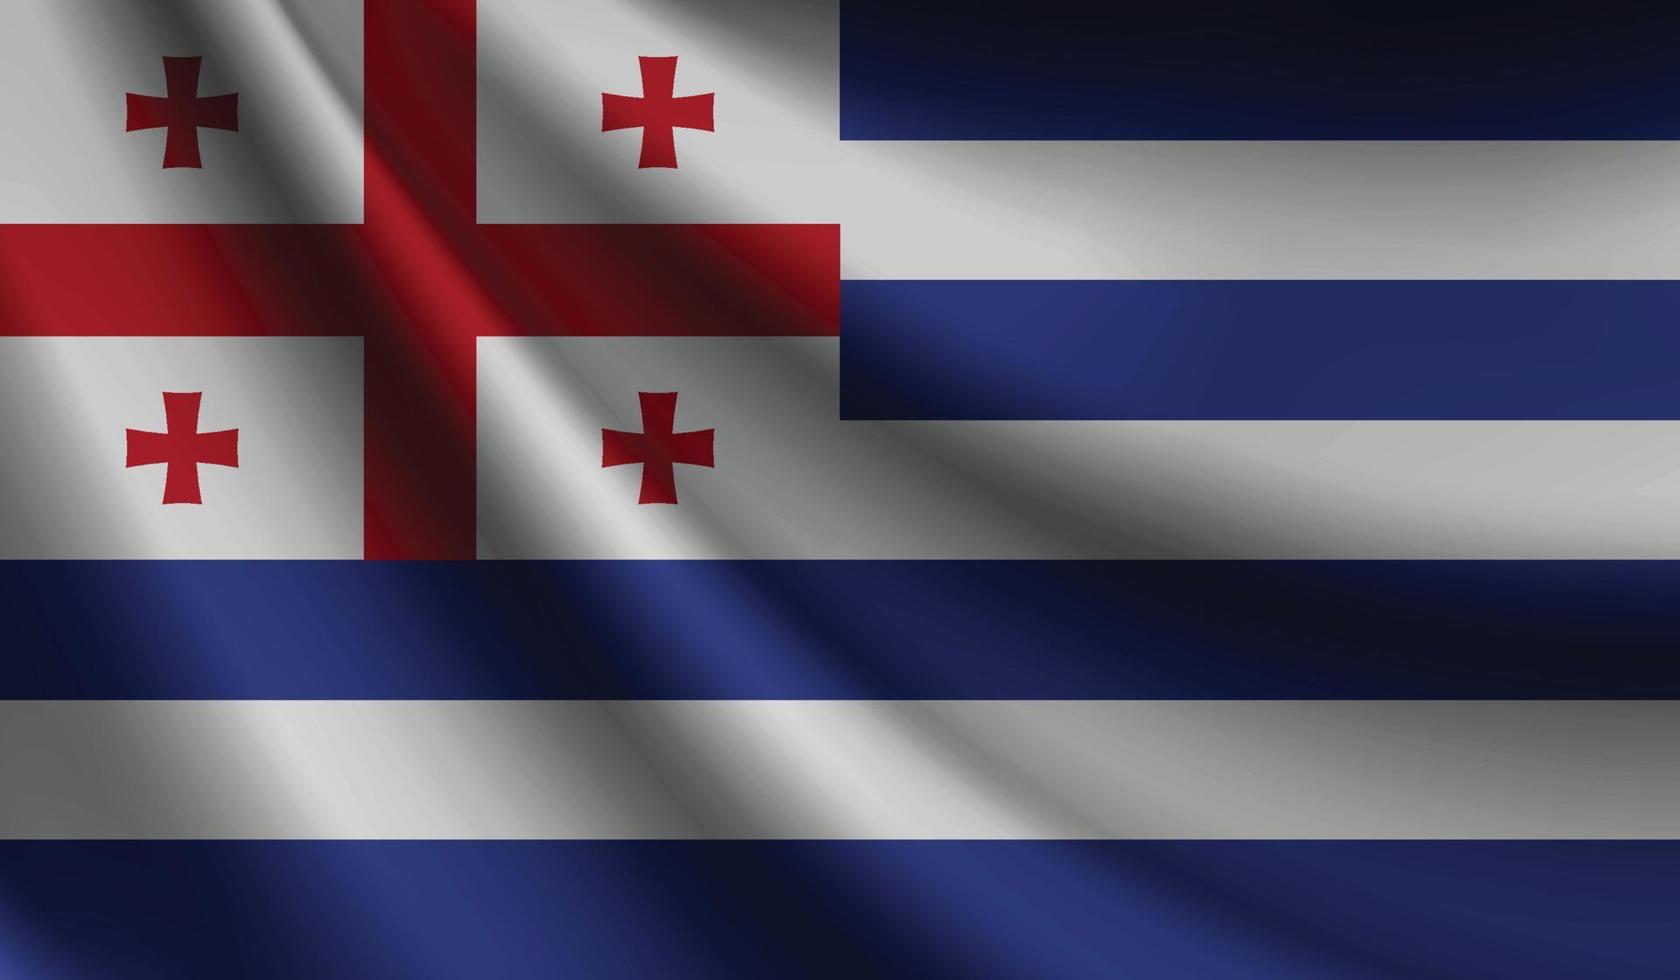 Adjara flag waving Background for patriotic and national design vector